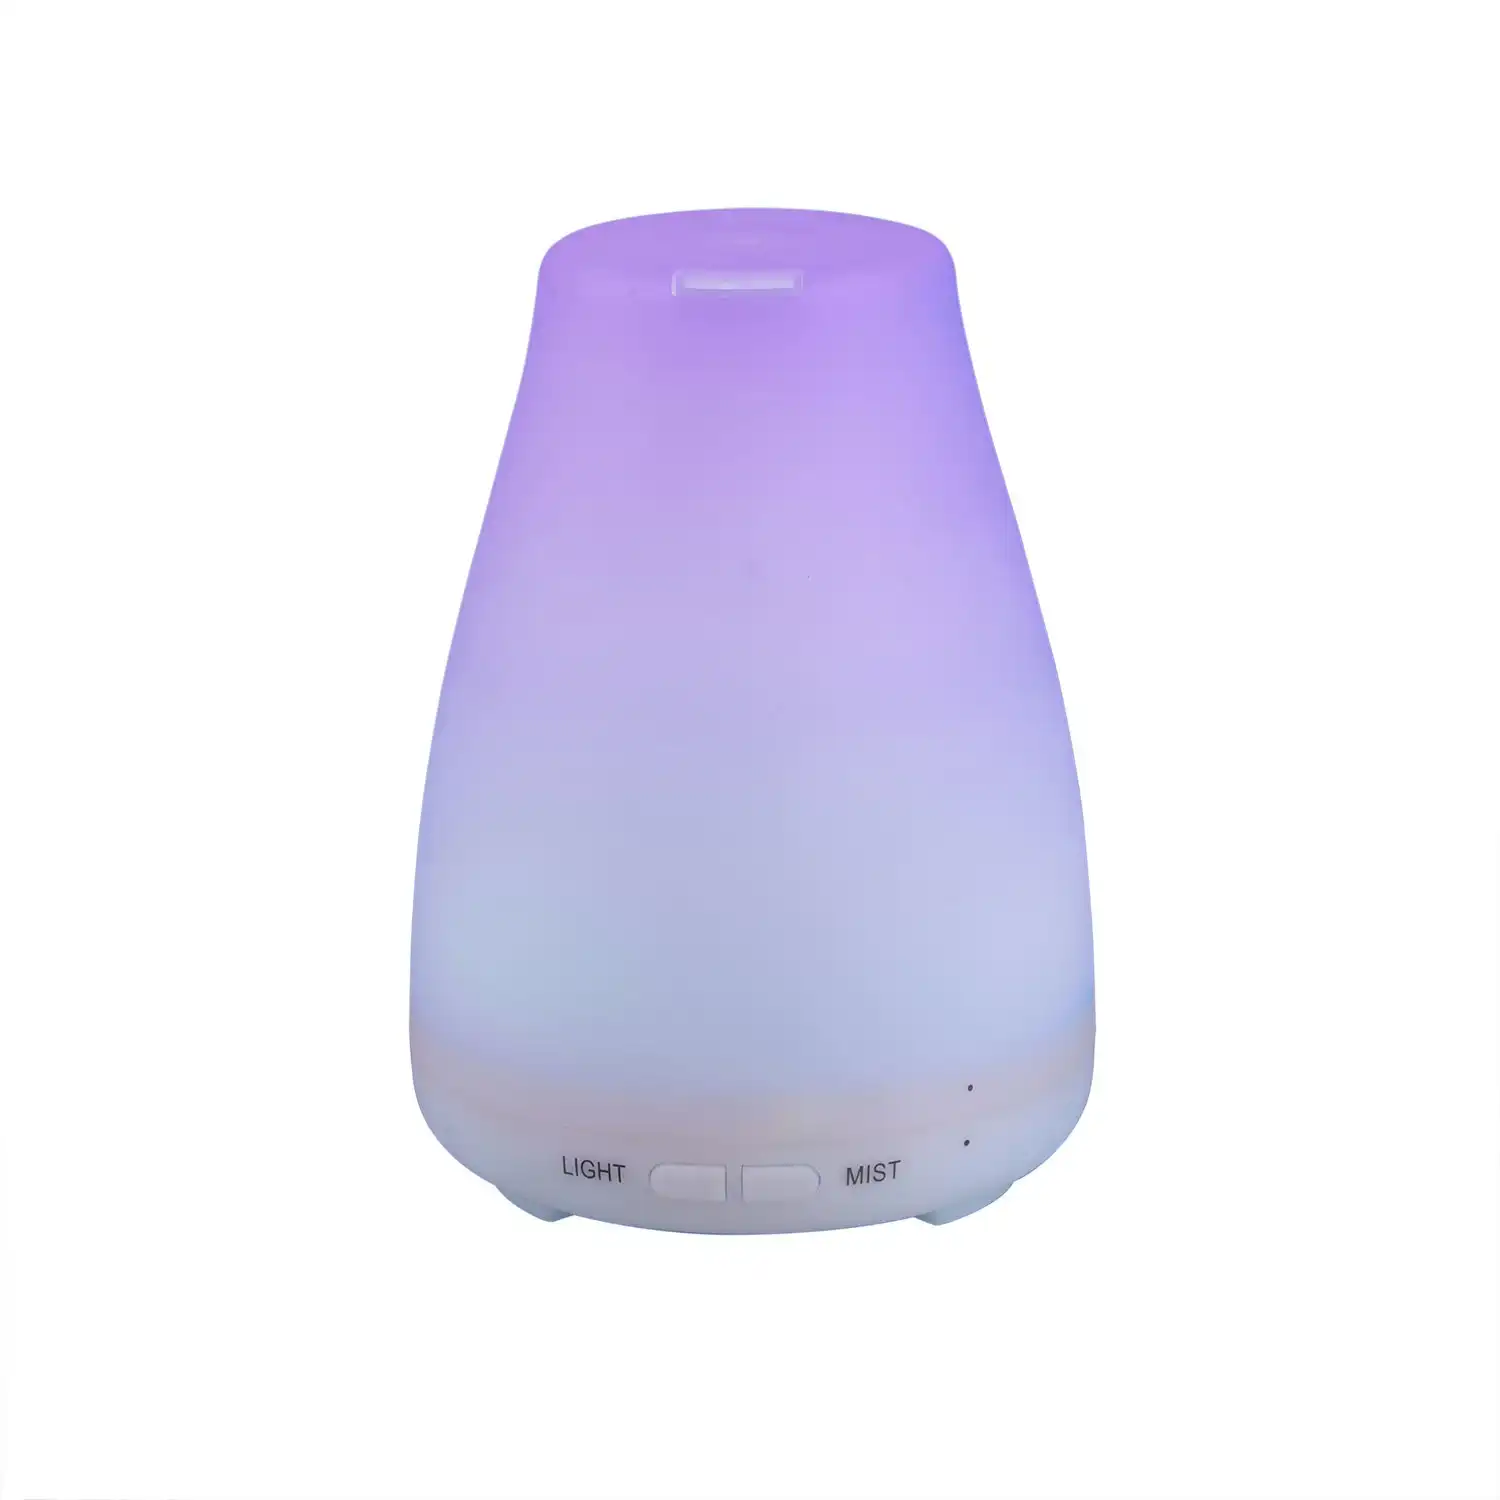 Laser Smart Wifi 150ml Aroma Oil Diffuser Aromatherapy Alexa Google Home